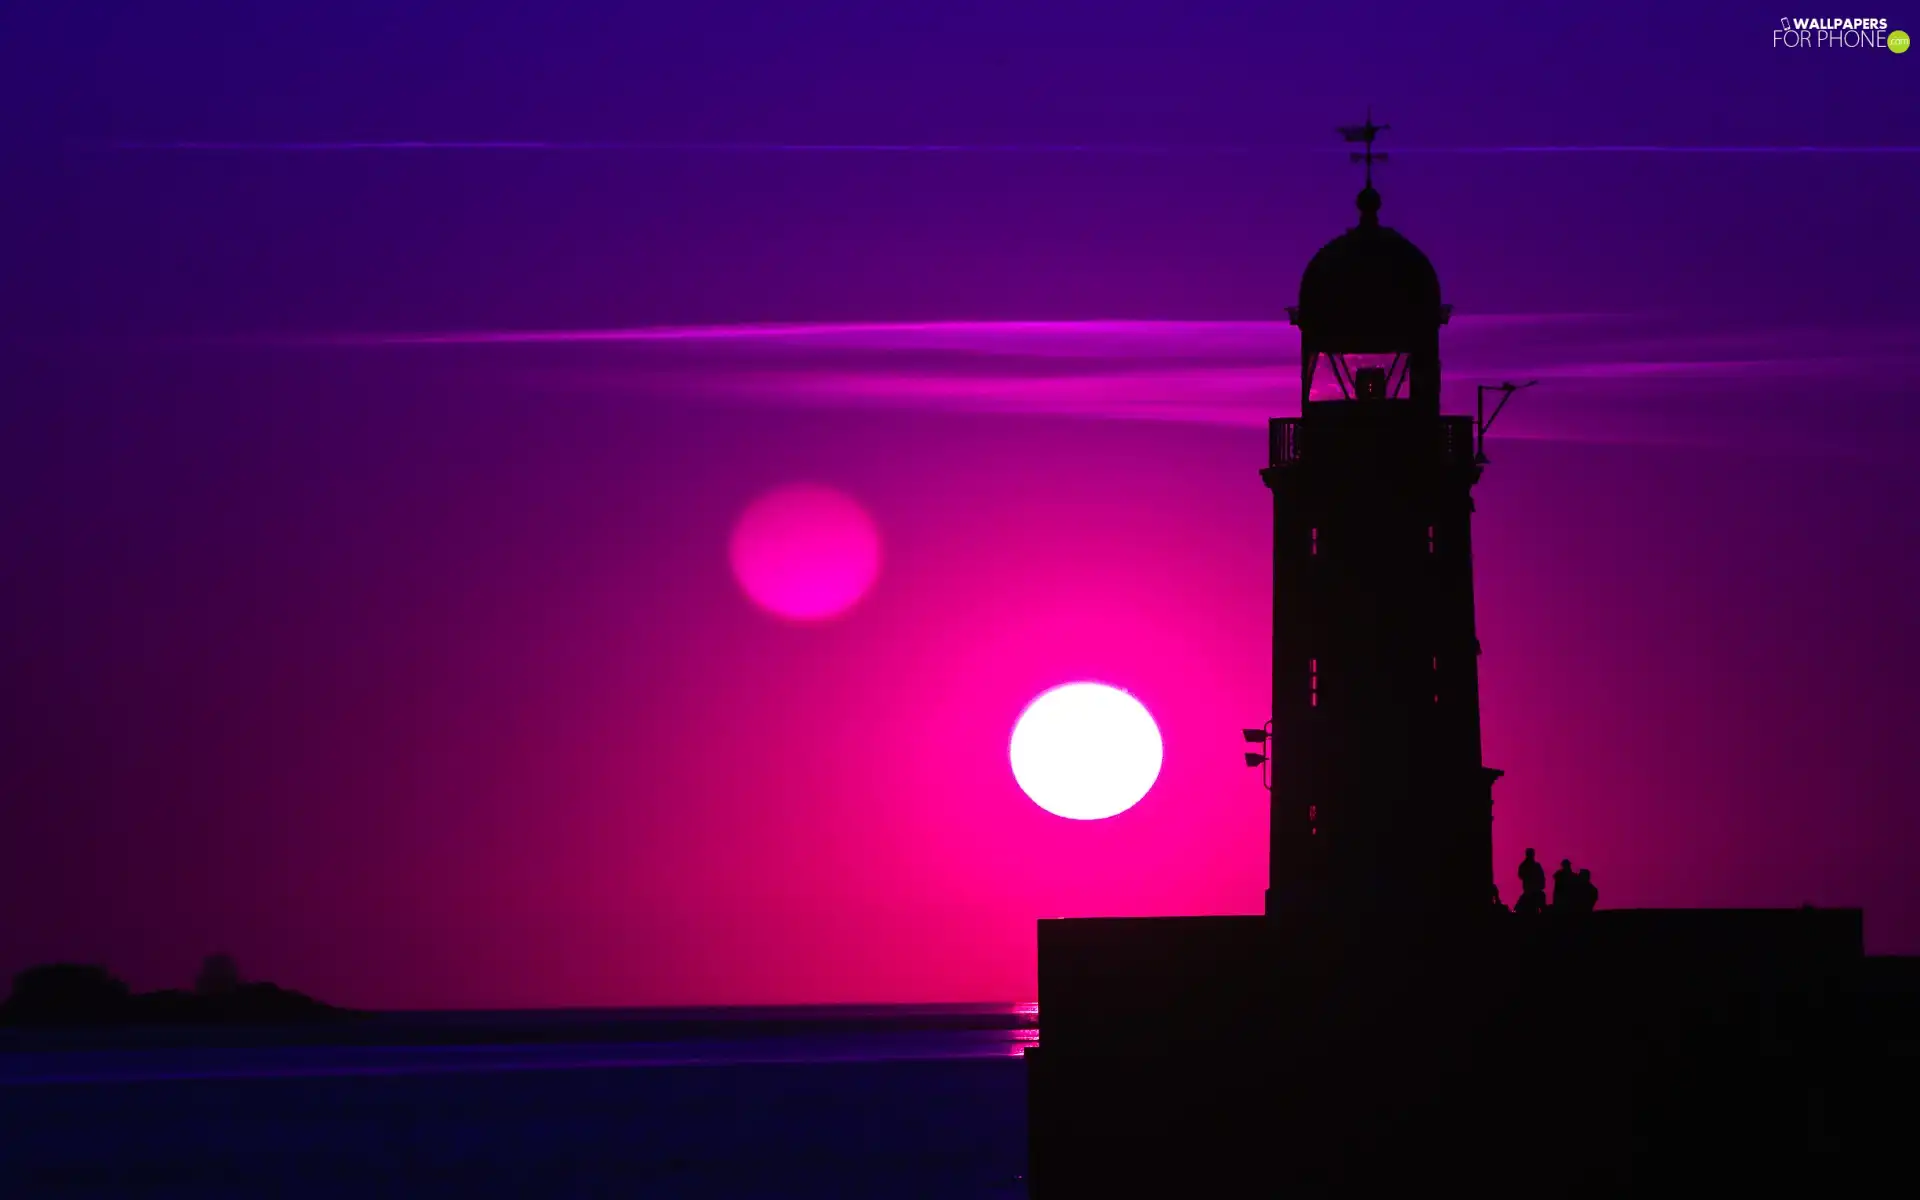 Lighthouses, Violet, Great Sunsets